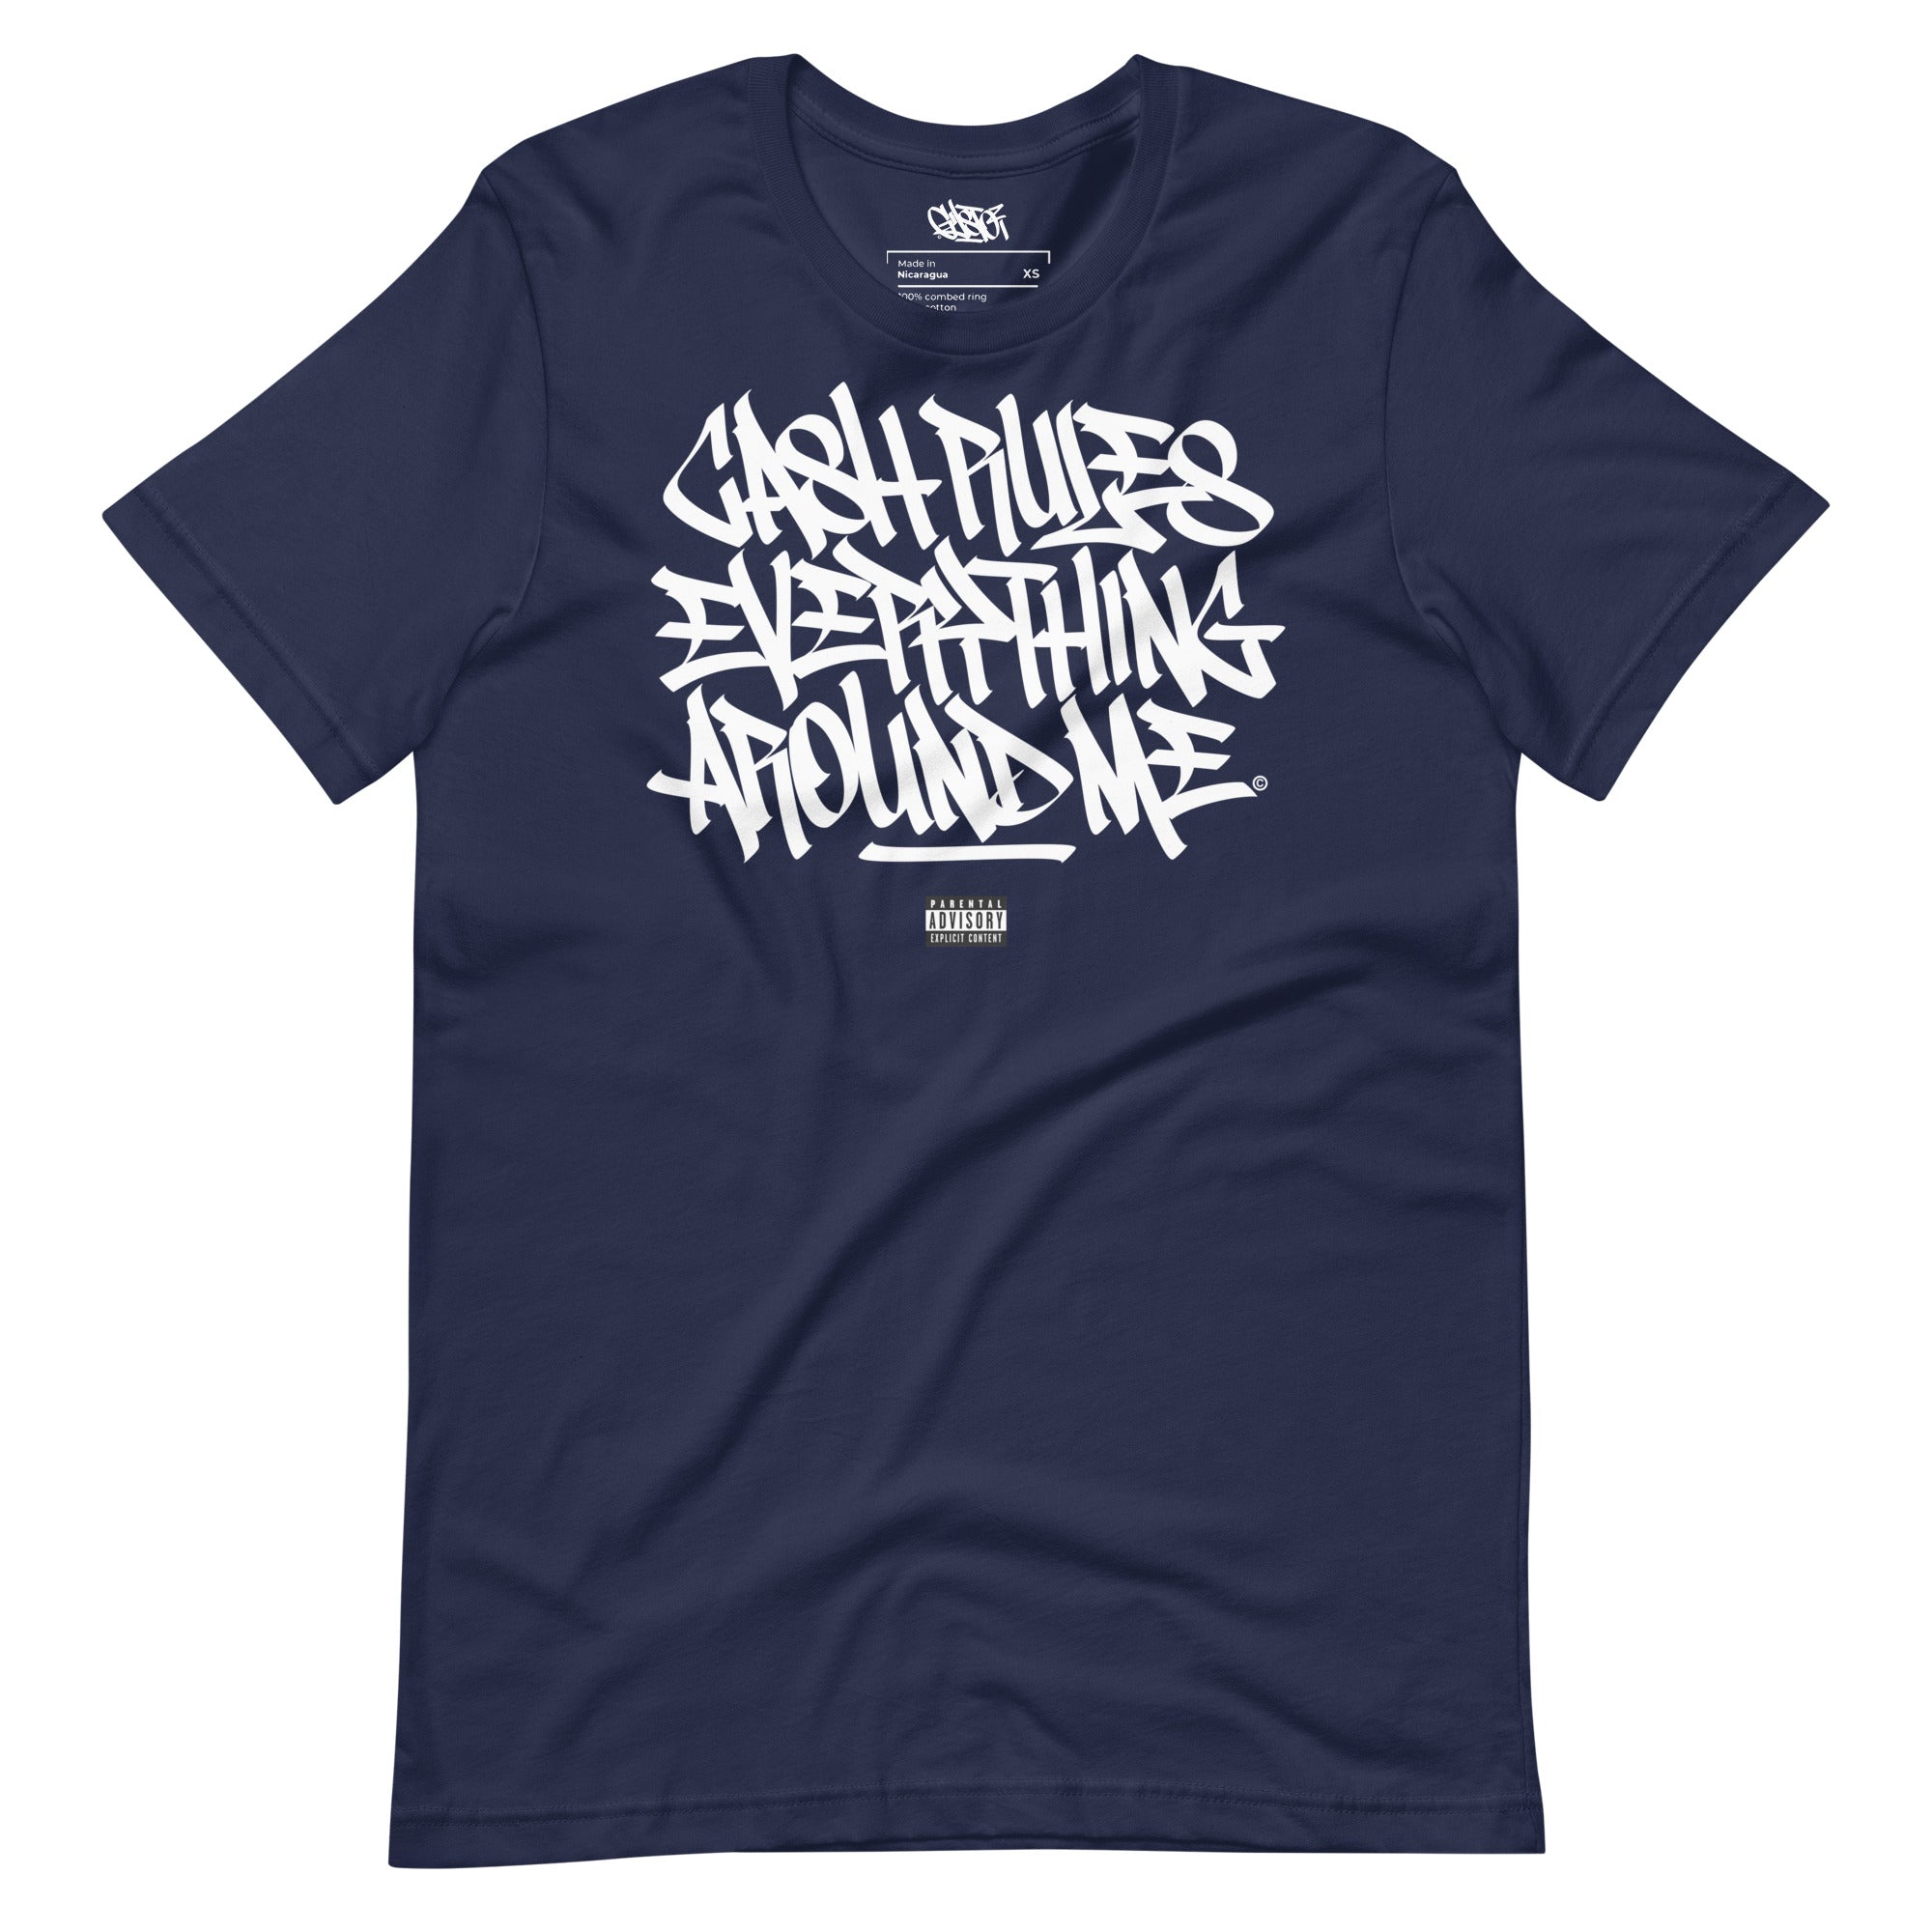 Cash Rules Everything Around Me - Unisex T-Shirt - GustoNYC